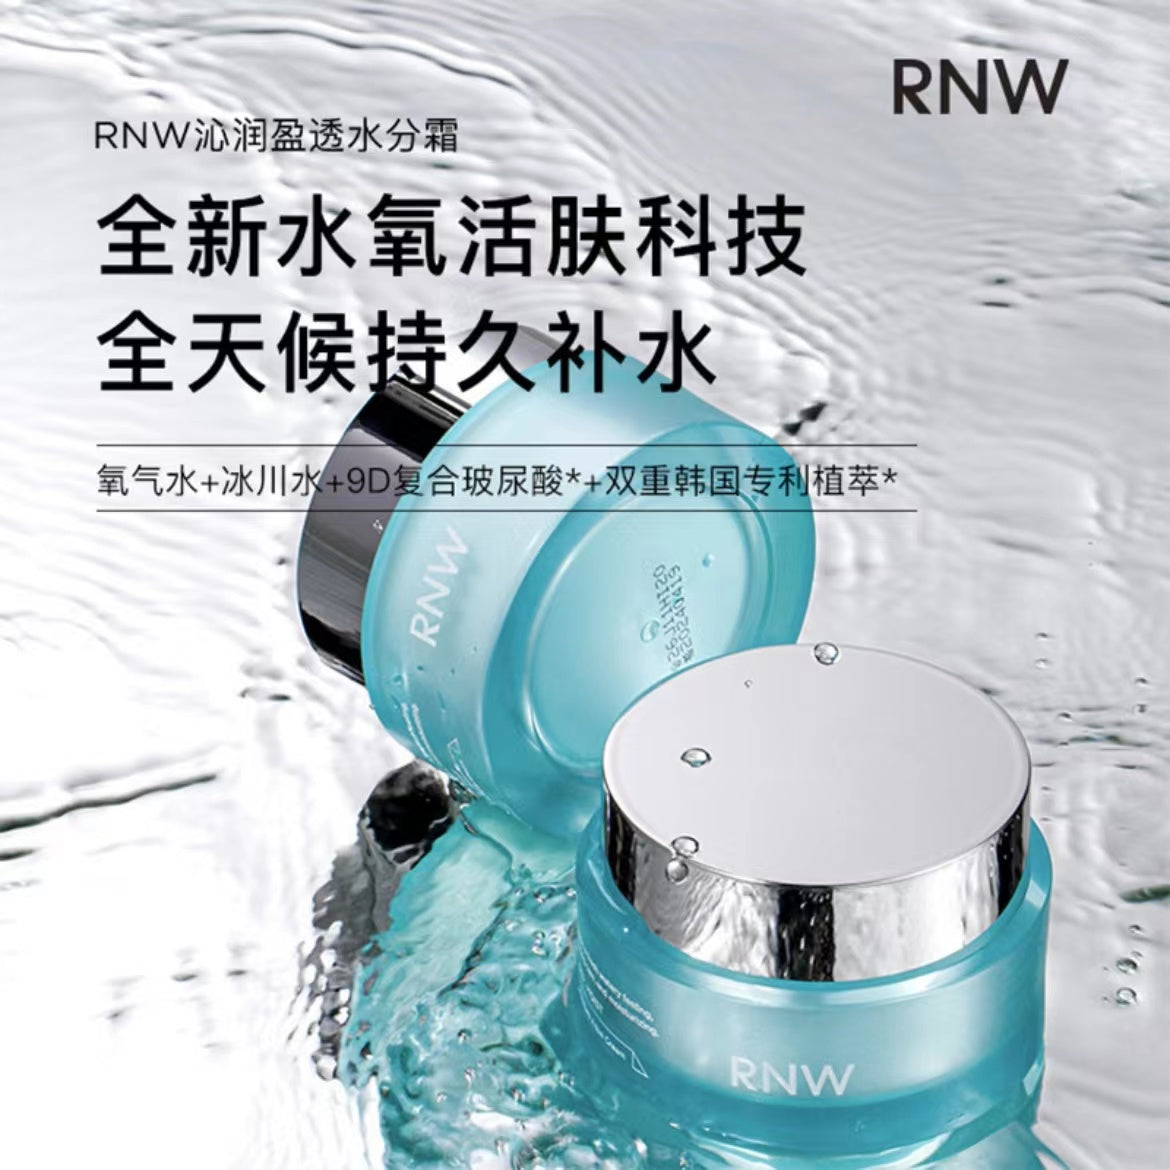 RNW Hyaluronic Acid Excellent Moisture Aqua Face Cream 50g 如薇盈透沁润水分霜